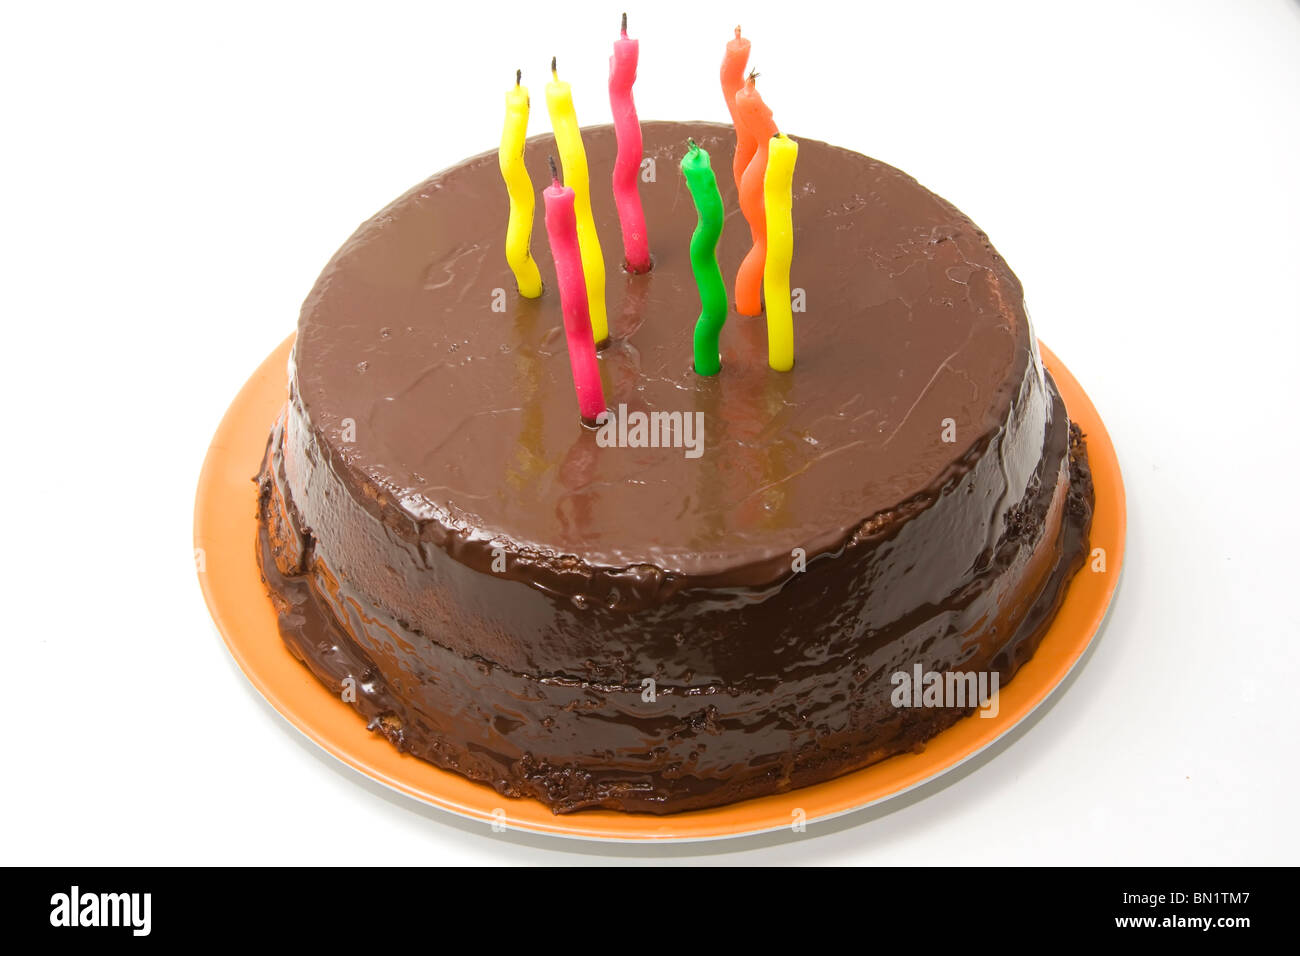 chocolate birthday cake with candles Stock Photo